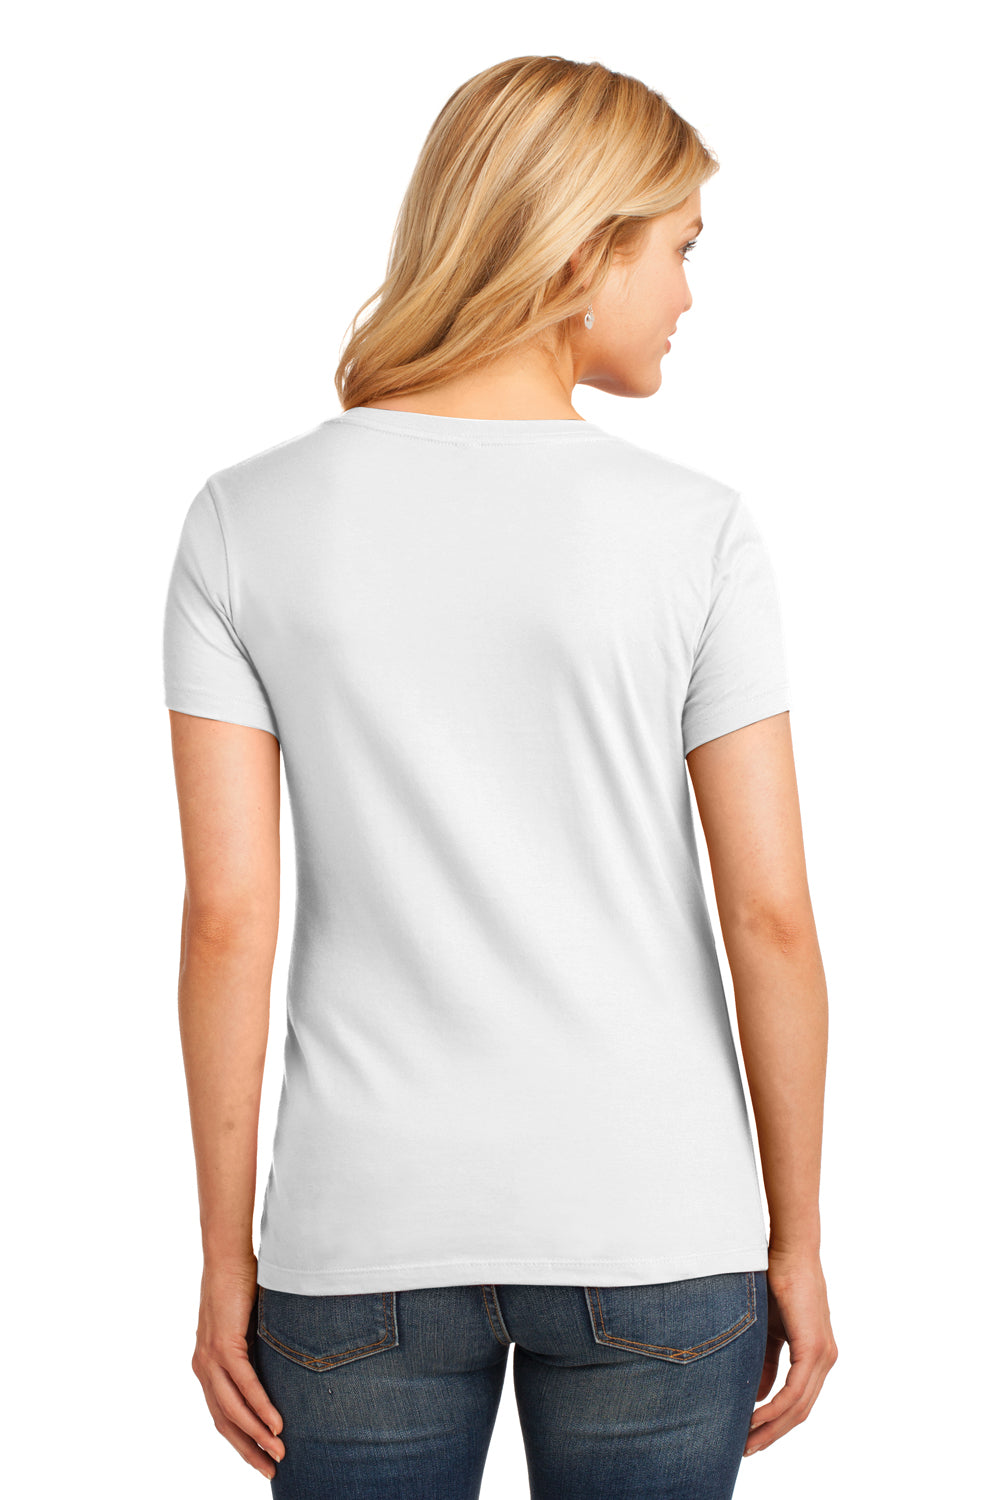 Port & Company LPC54V Womens Core Short Sleeve V-Neck T-Shirt White Back